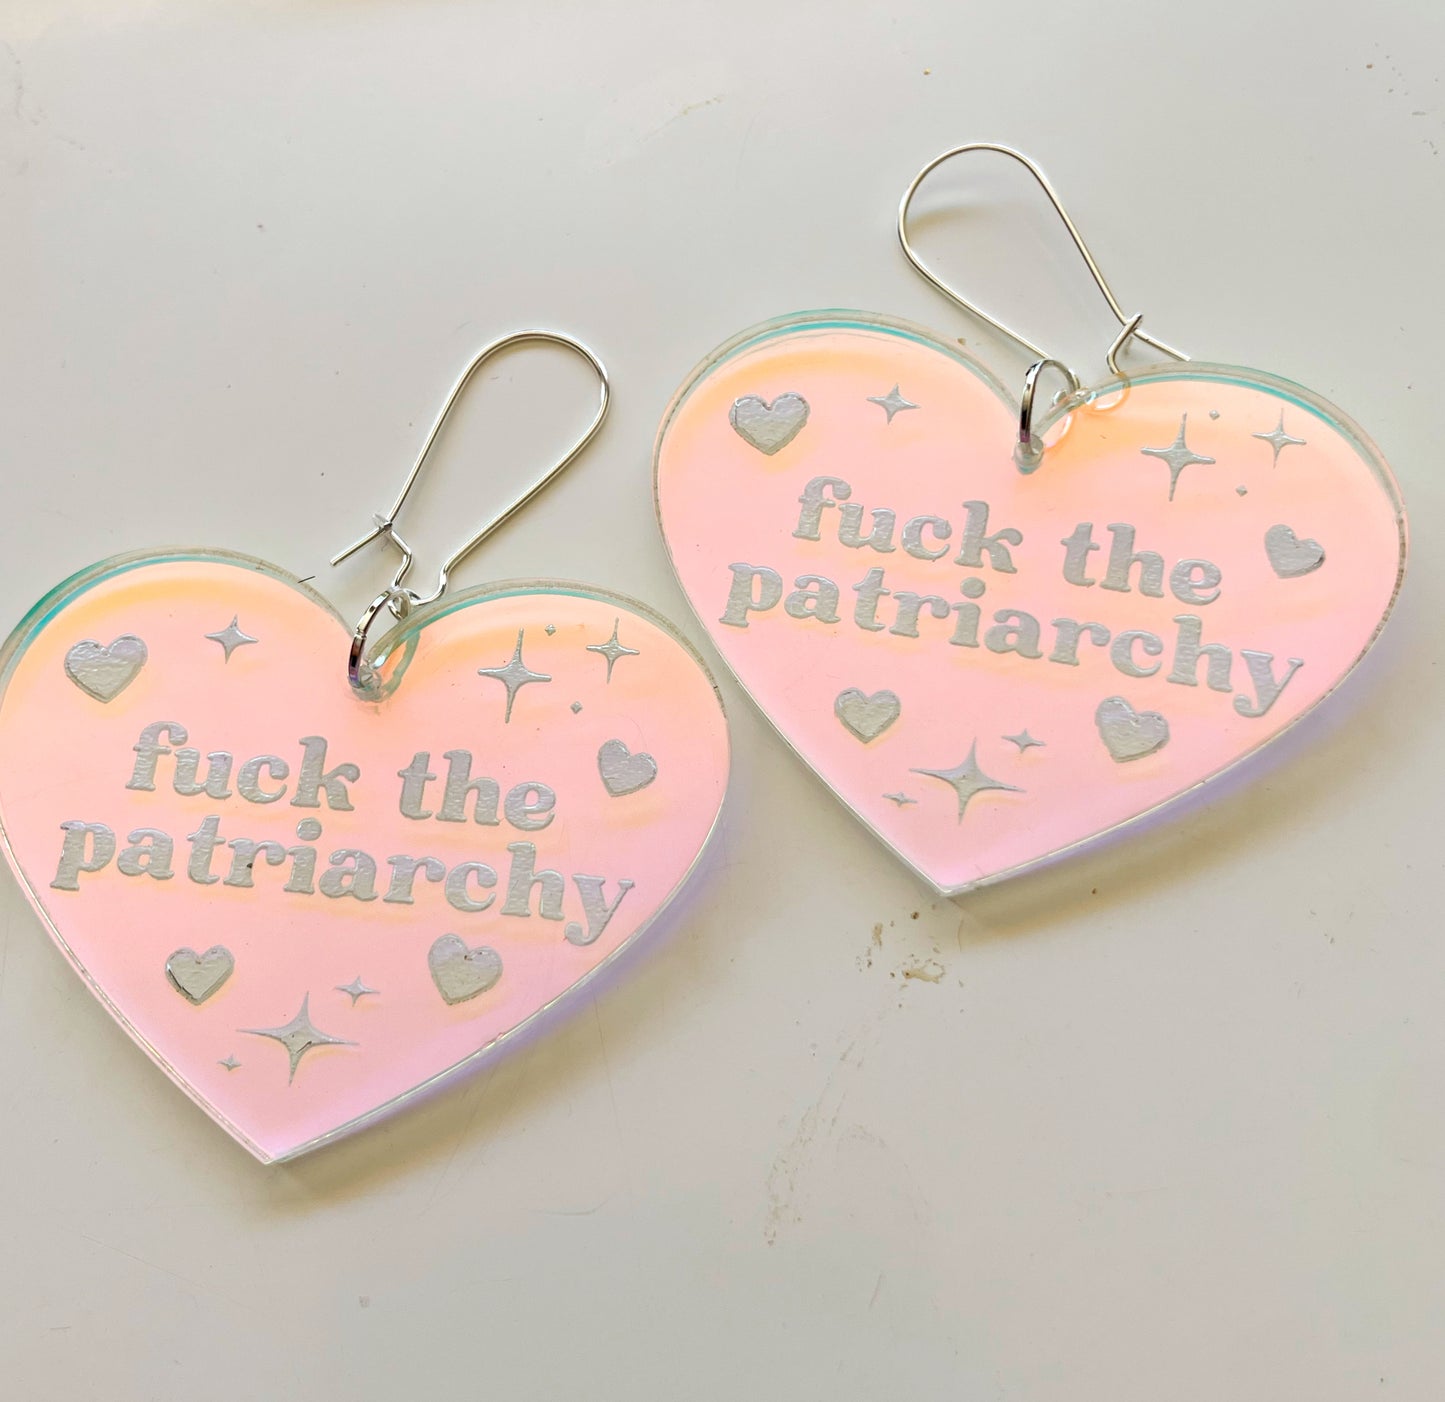 Fuck the Patriarchy (Nessa's Version)